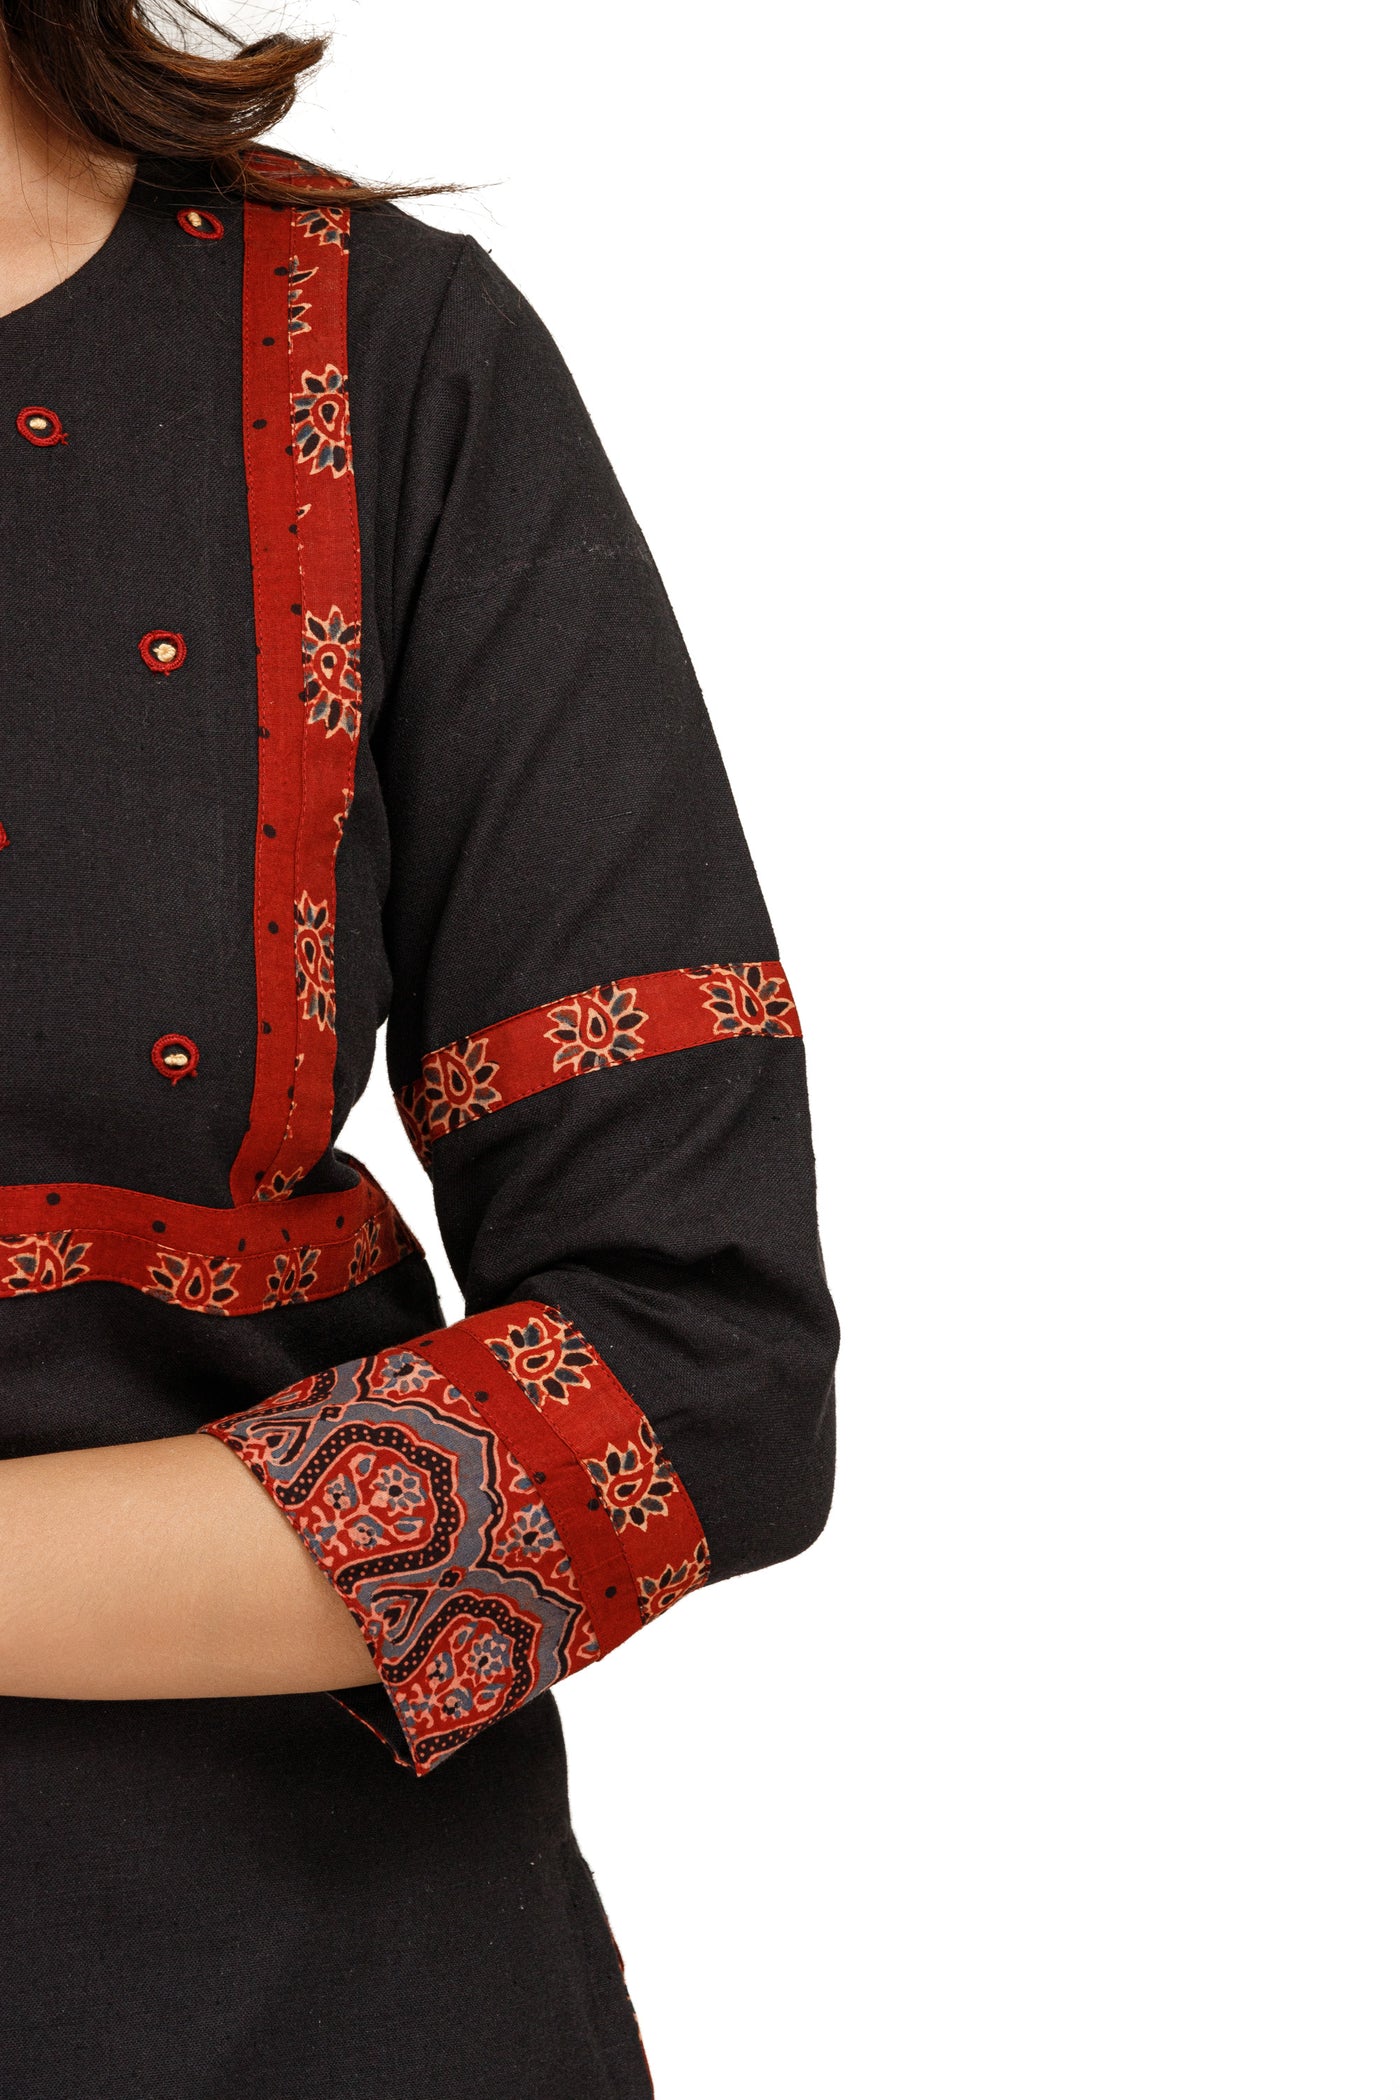 Inayat Handloom Black Kurta With Ajrakh Detailing and Hand Embroidery